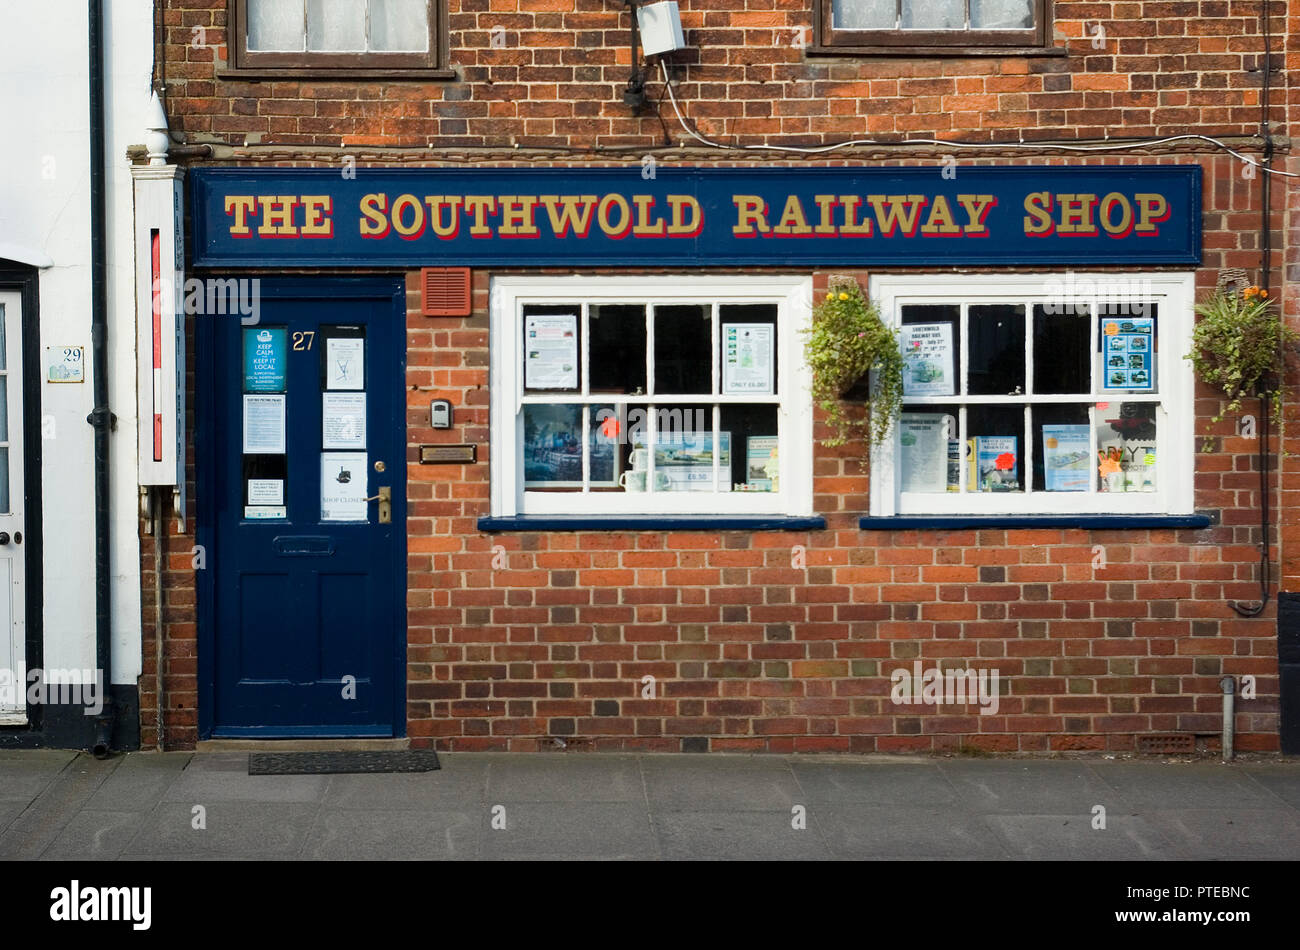 Railway Shop, Southwold Stock Photo